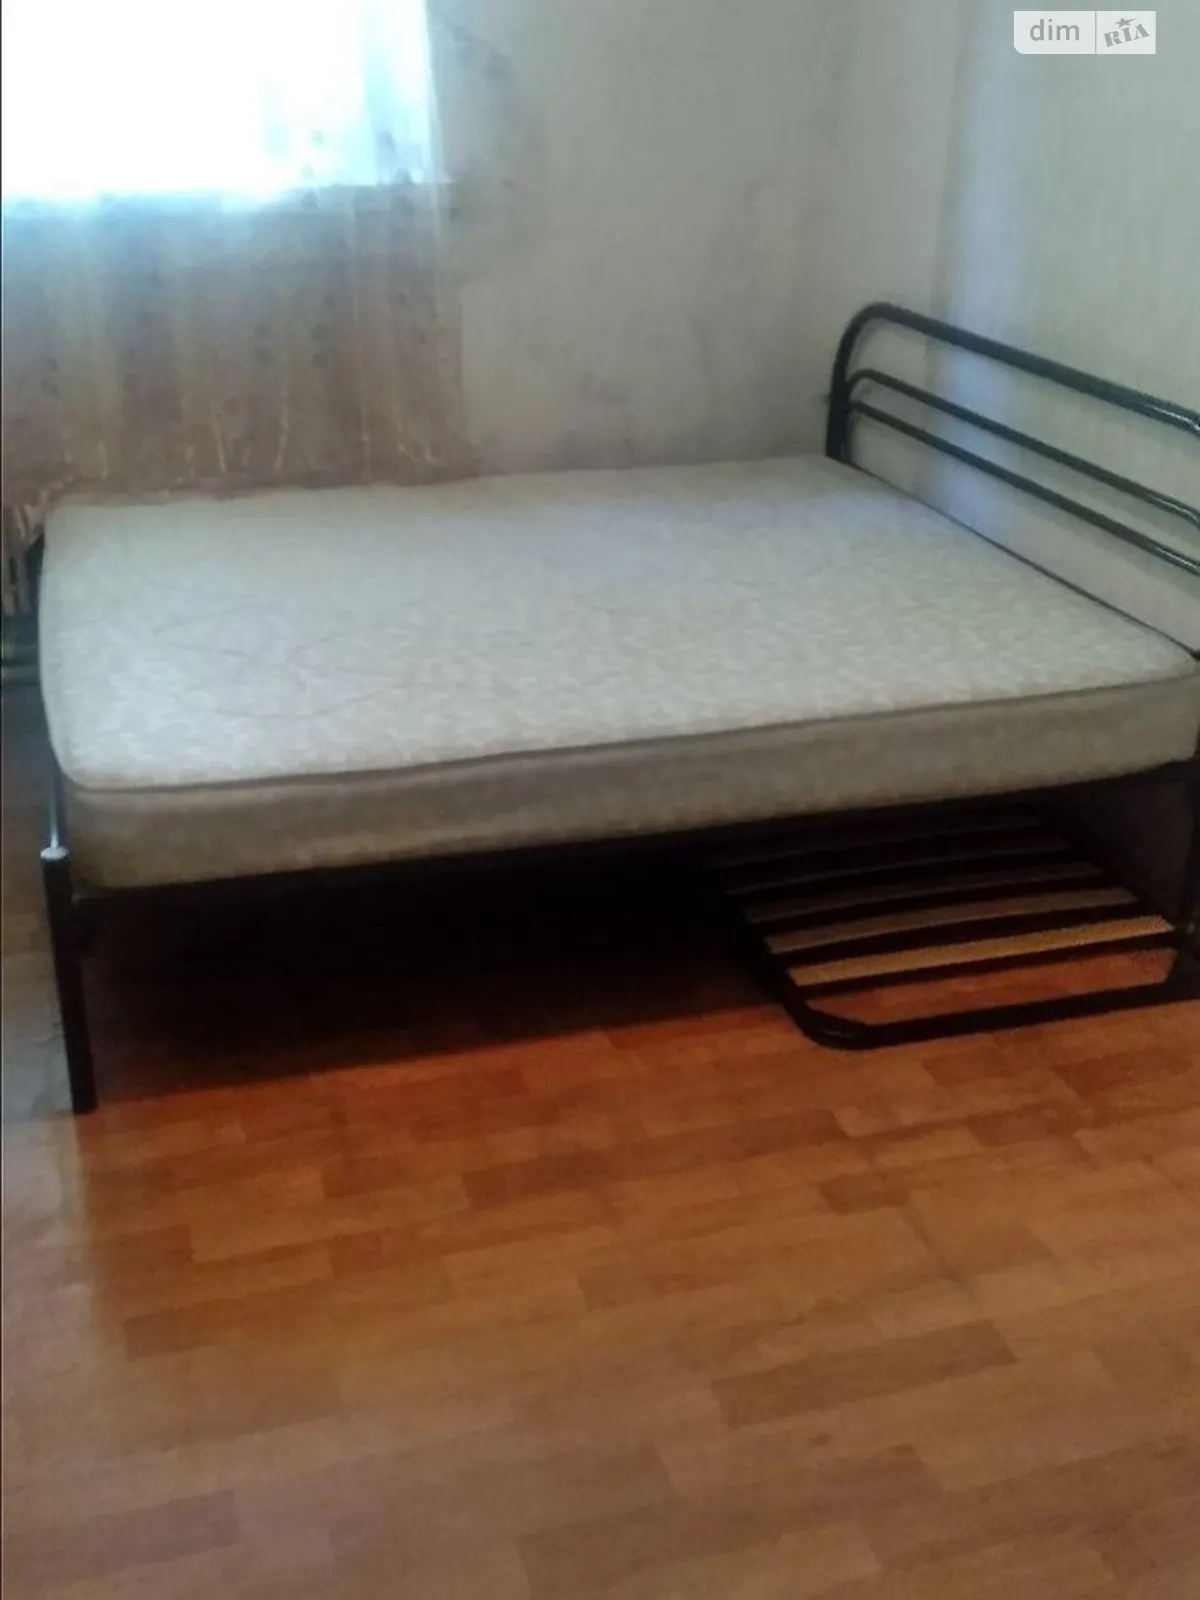 Сдается в аренду комната 18 кв. м в Харькове - фото 2